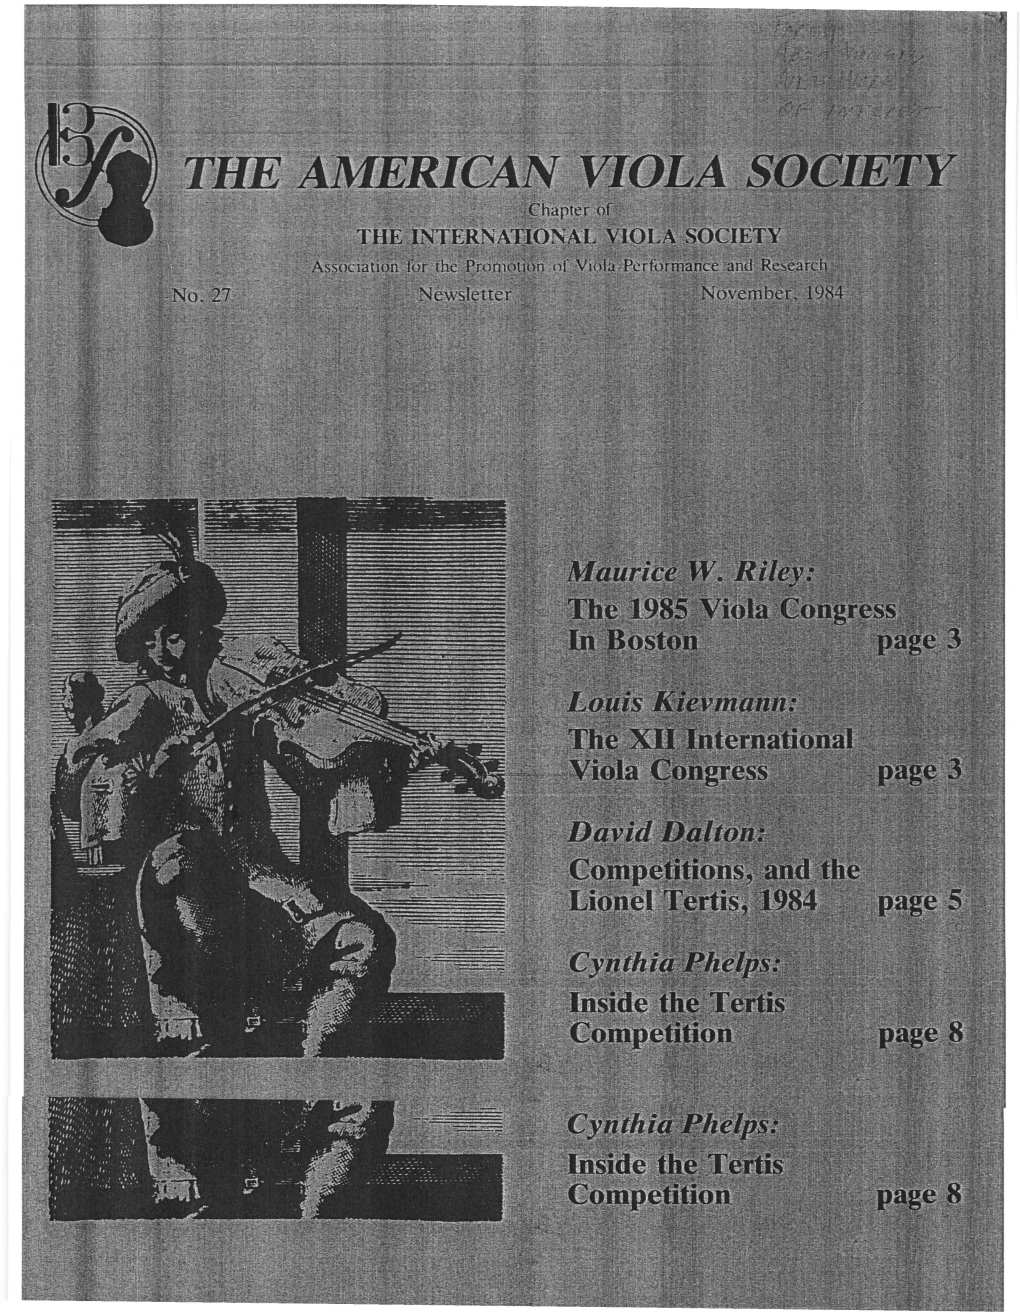 American Viola Society Newsletter No. 27, November 1984